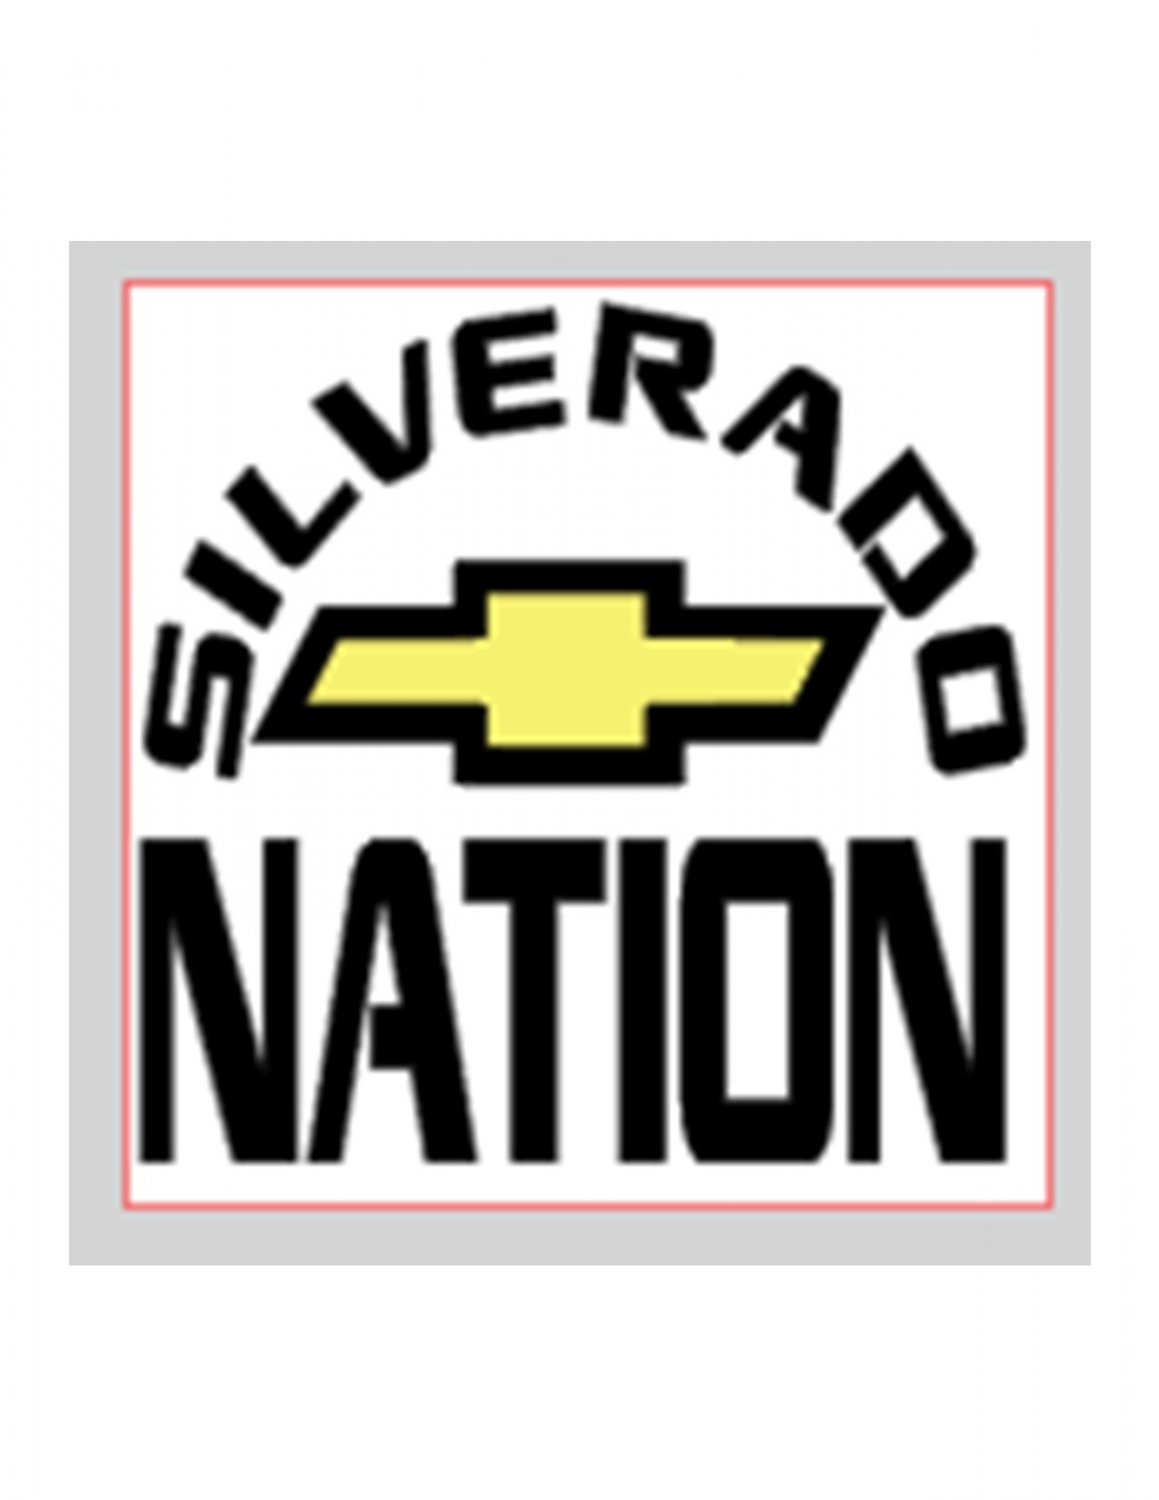 Silverado Nation 5"x5" Decal - 1500